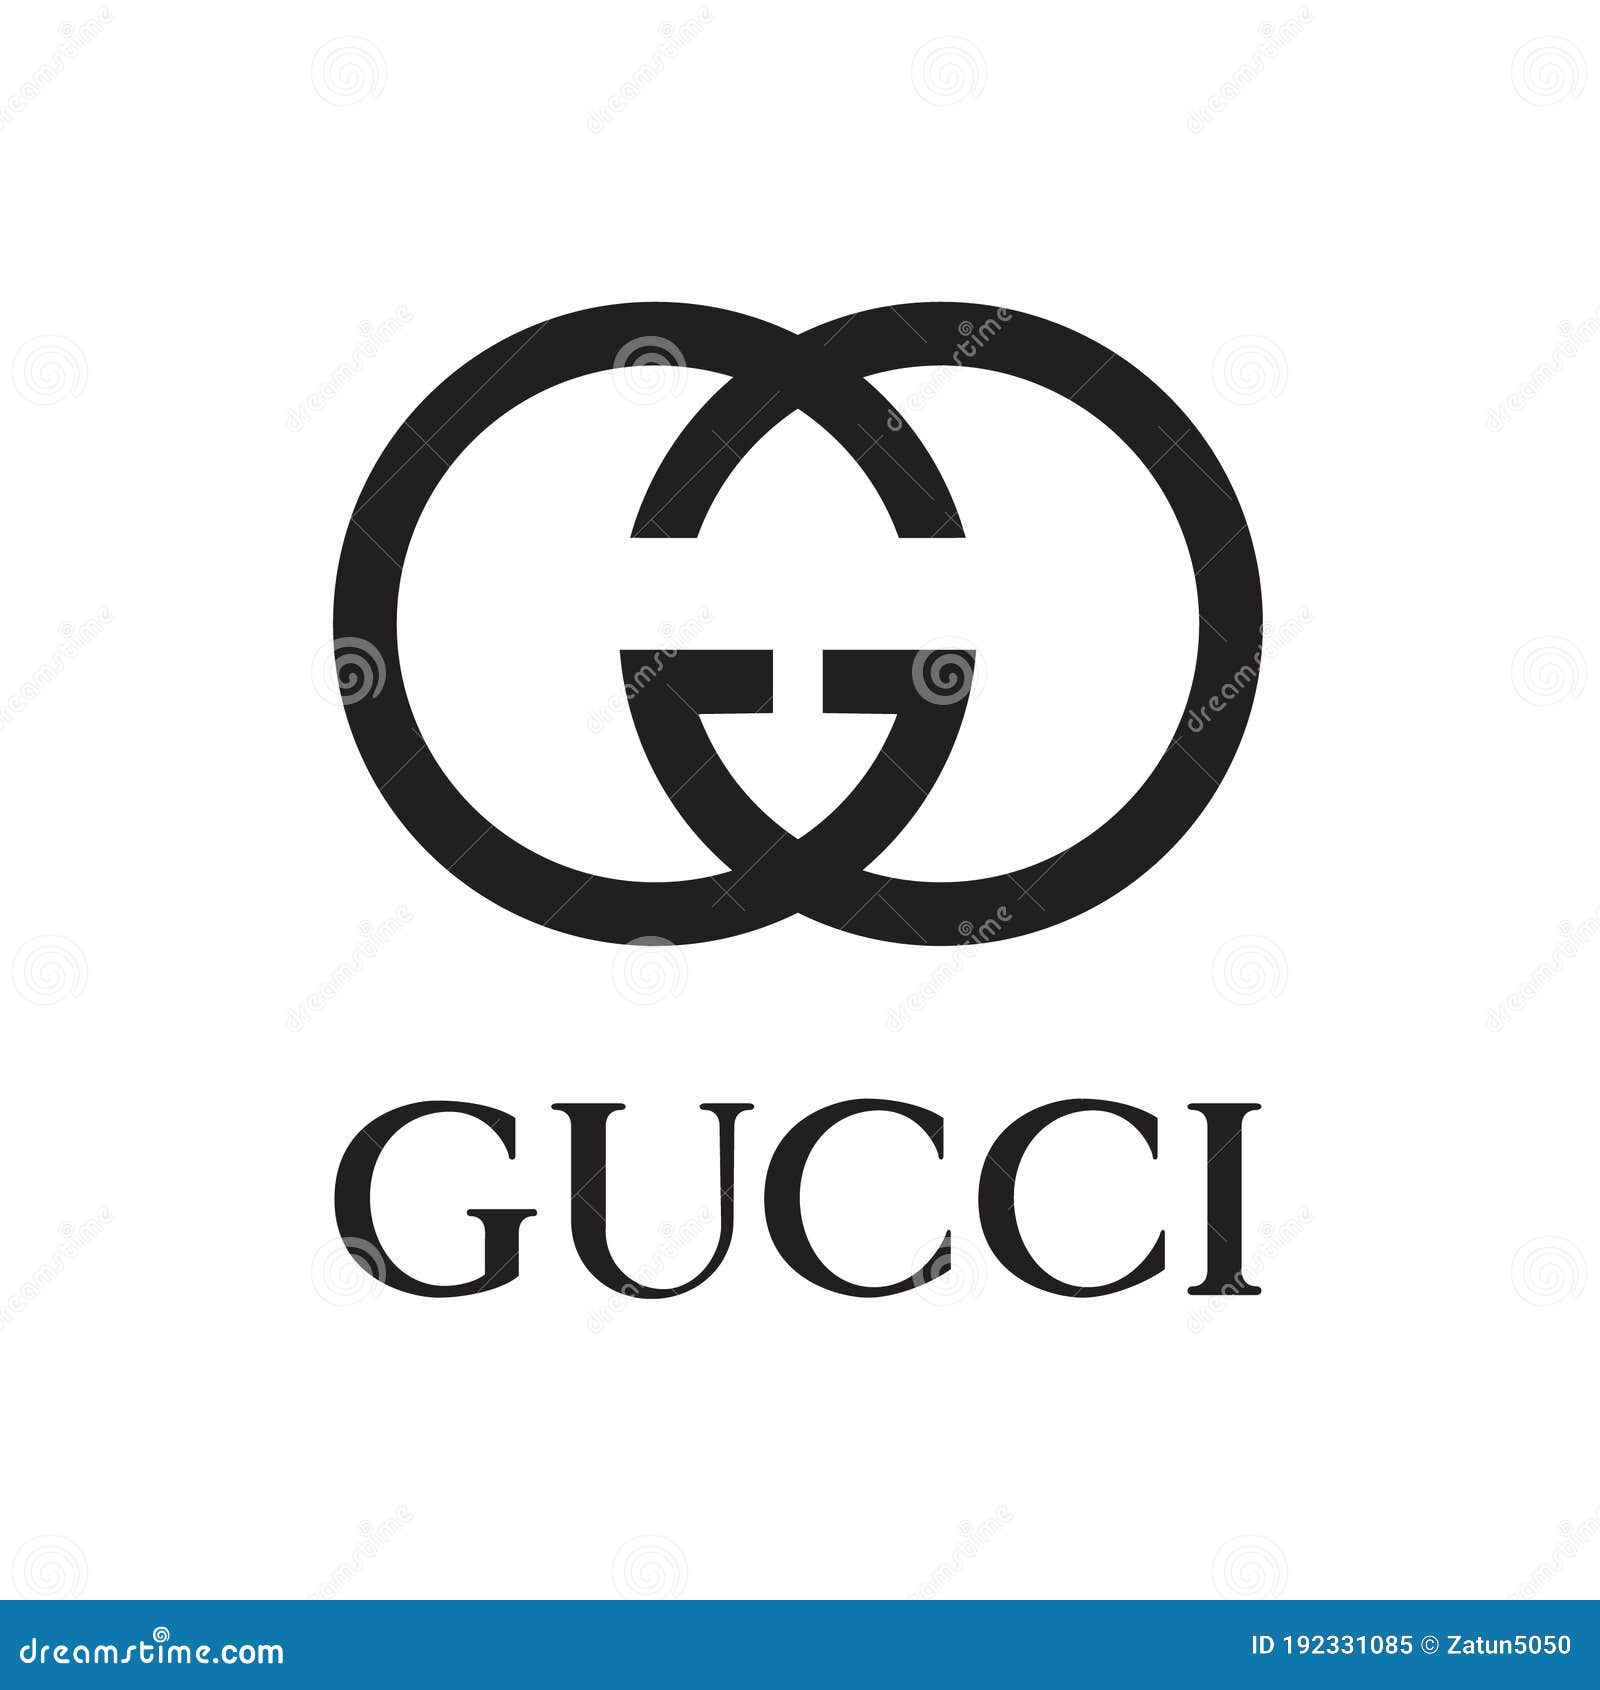 Gucci Fashion Brand Vector Logo Editorial Image - Illustration of